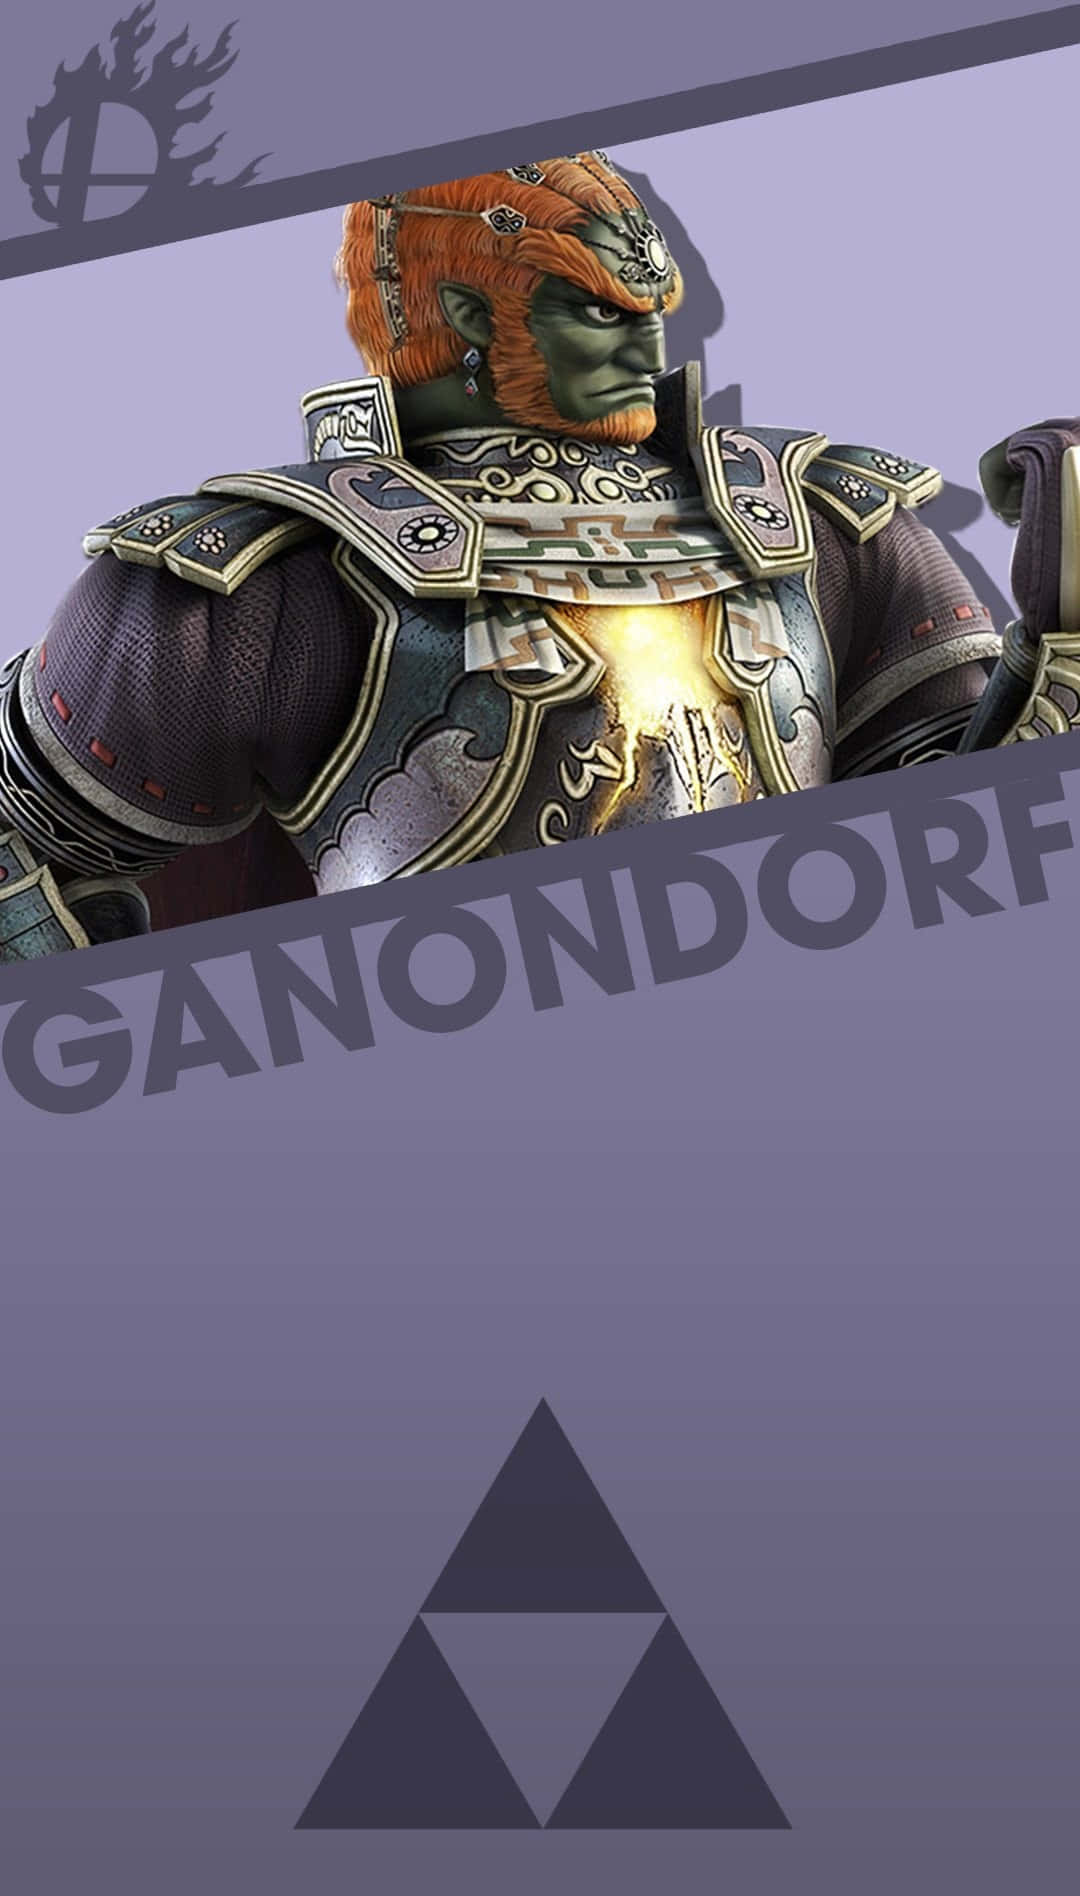 The Mighty Ganondorf from The Legend of Zelda Series Wallpaper